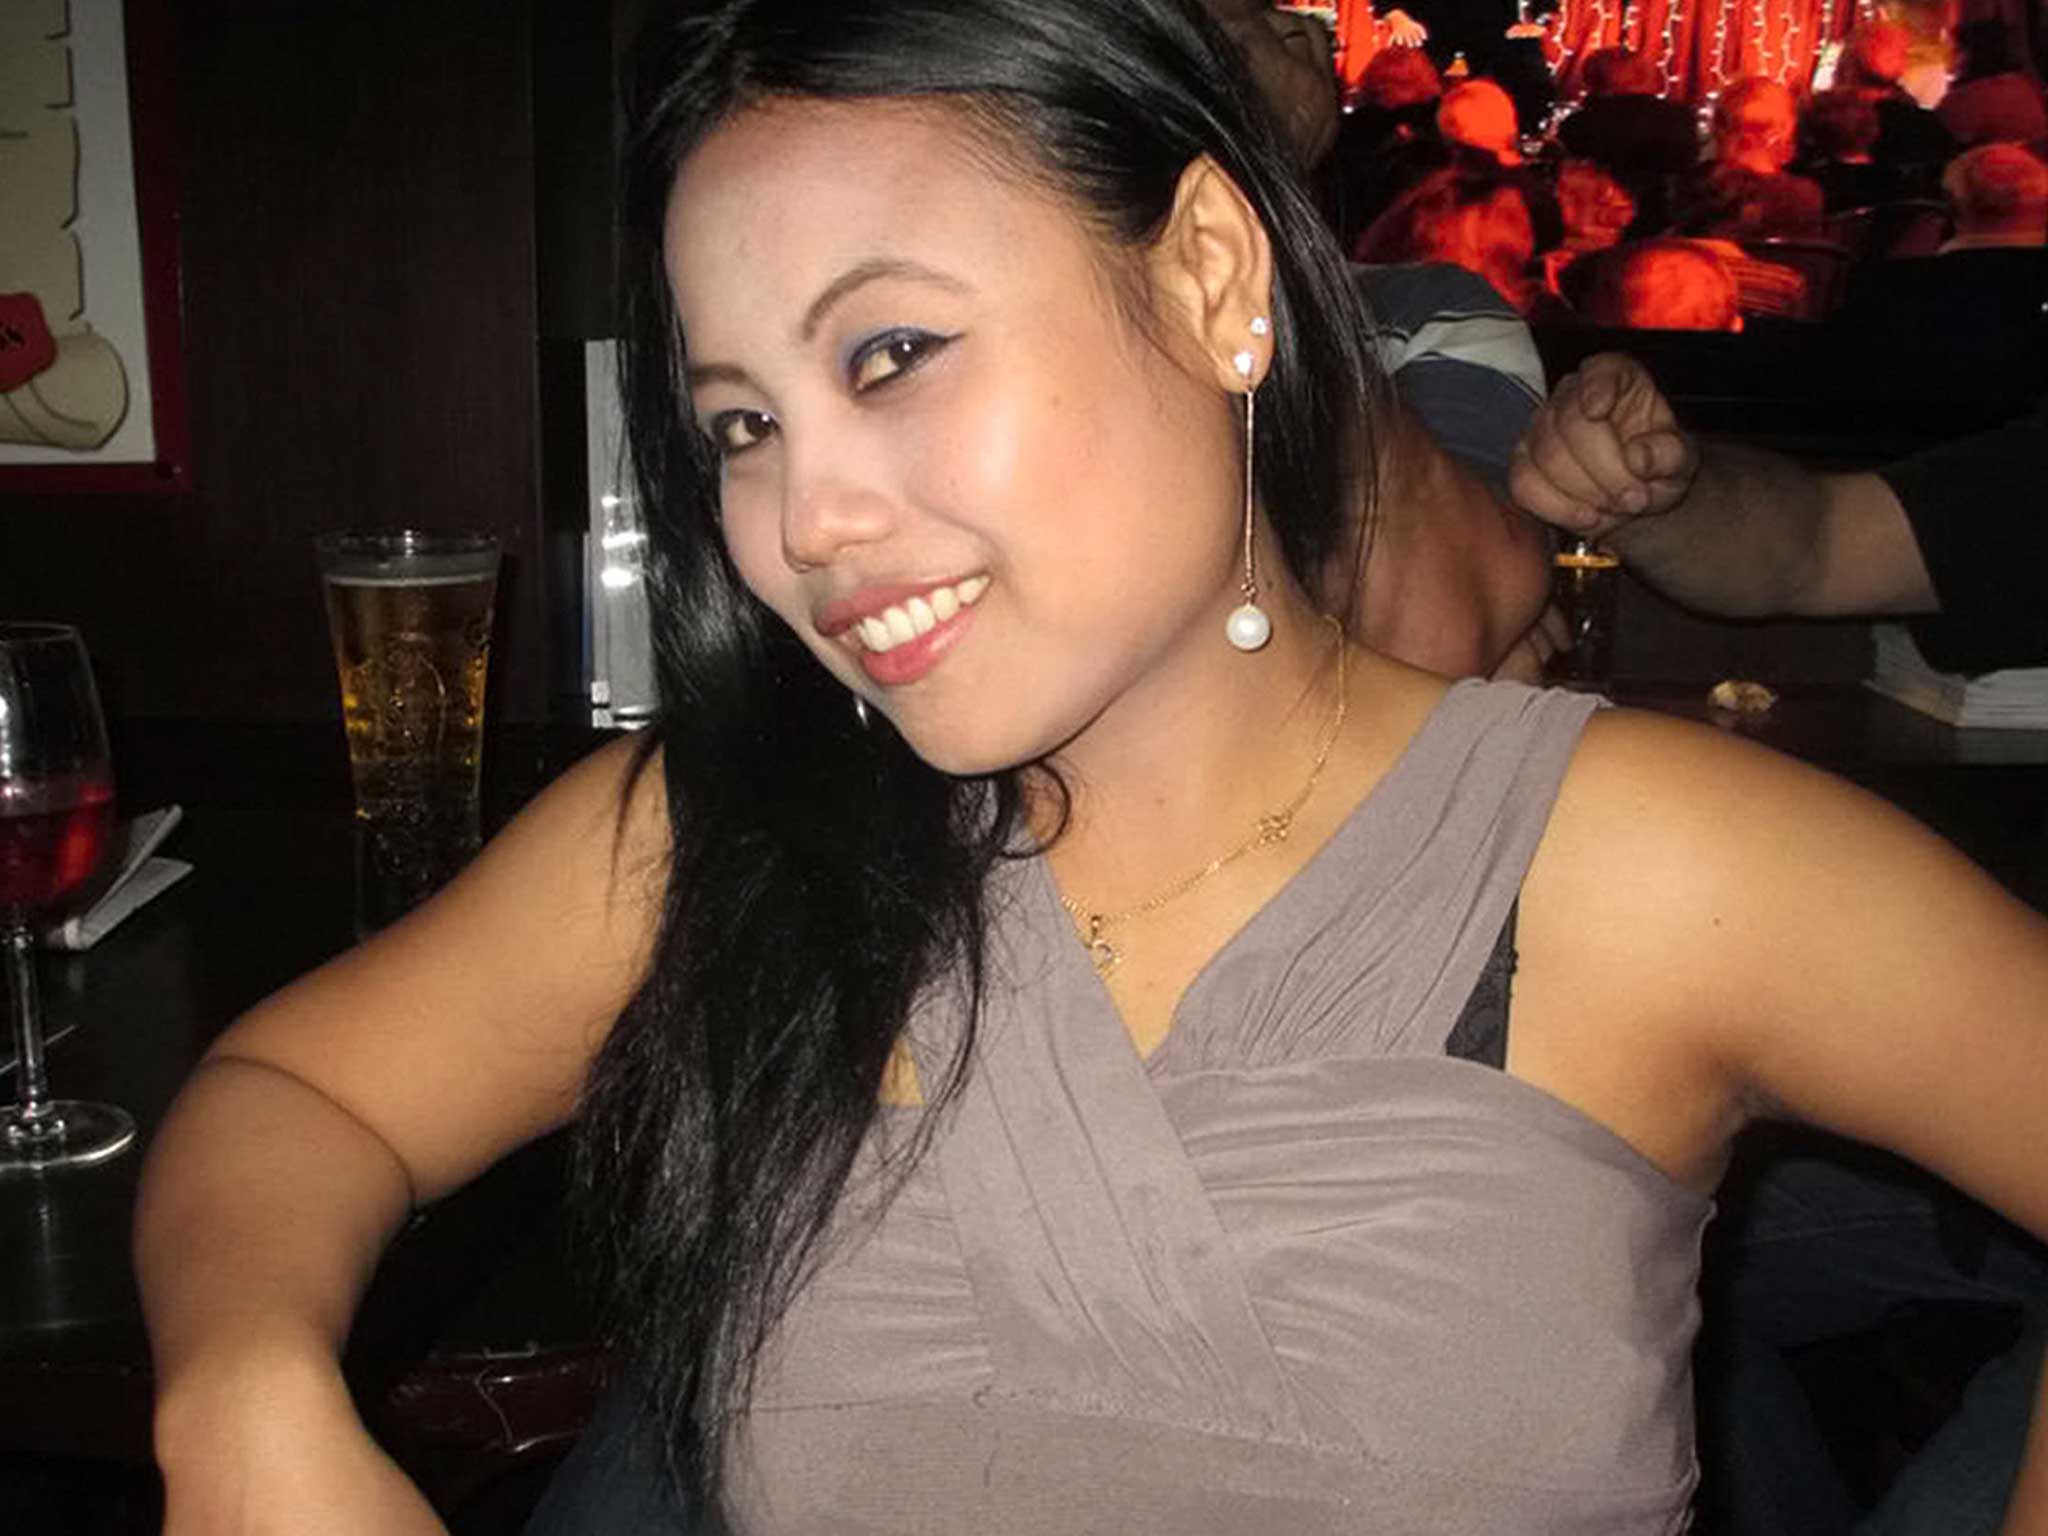 Seneng Mujiasih, also known as Jesse Lorena, was found murdered in Rurik Jutting's luxury flat